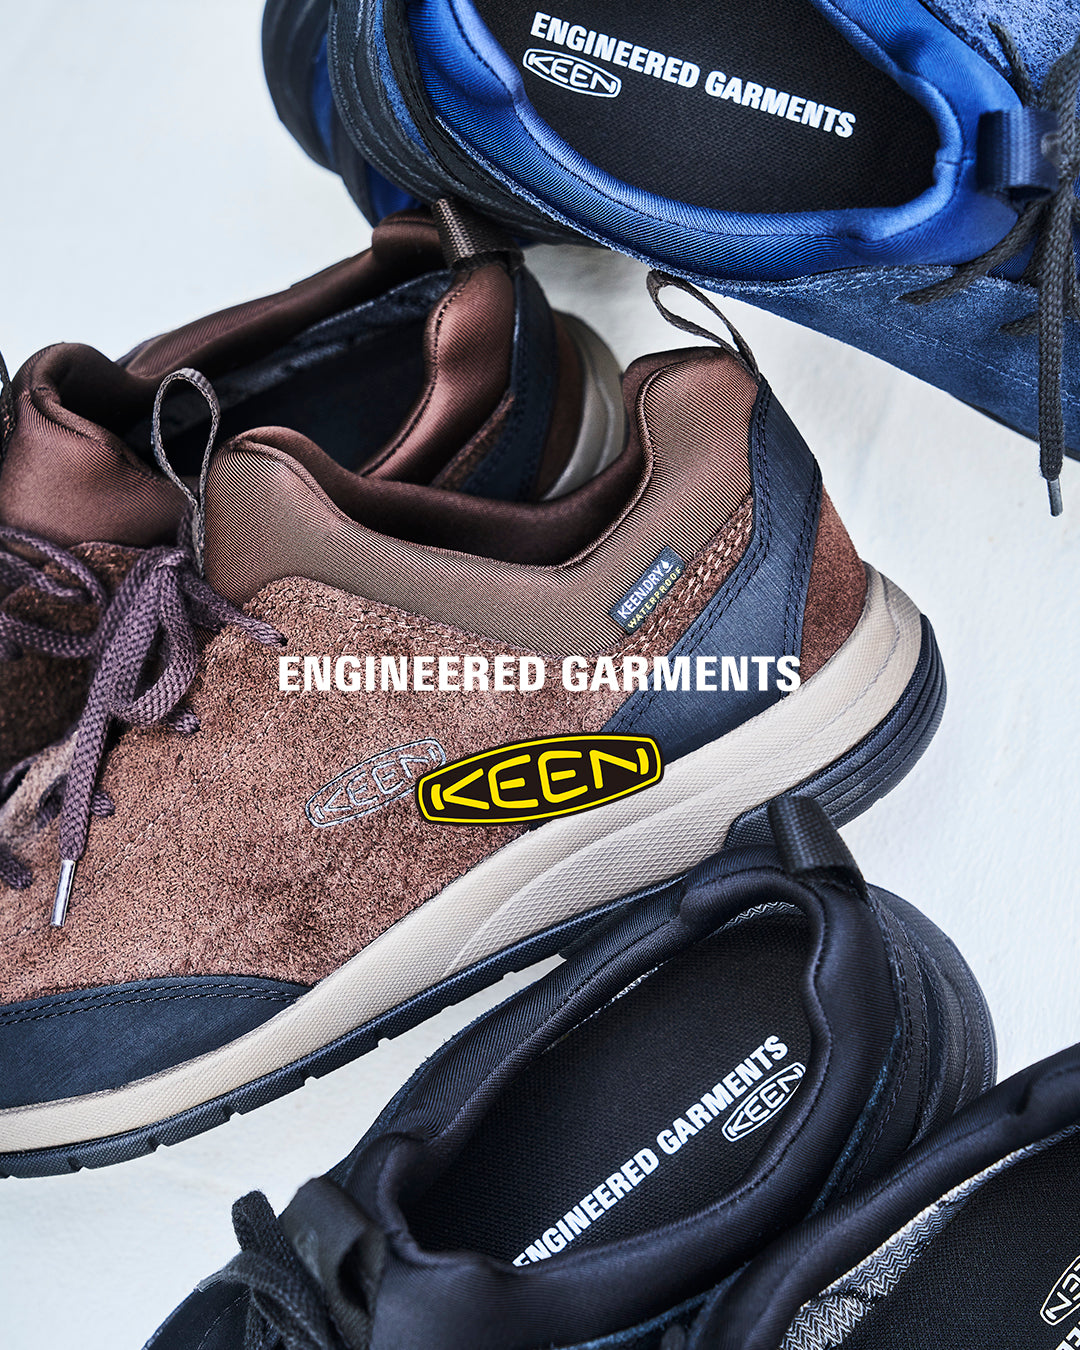 Engineered Garments x Keen - JASPER II - Releasing 11.03.22